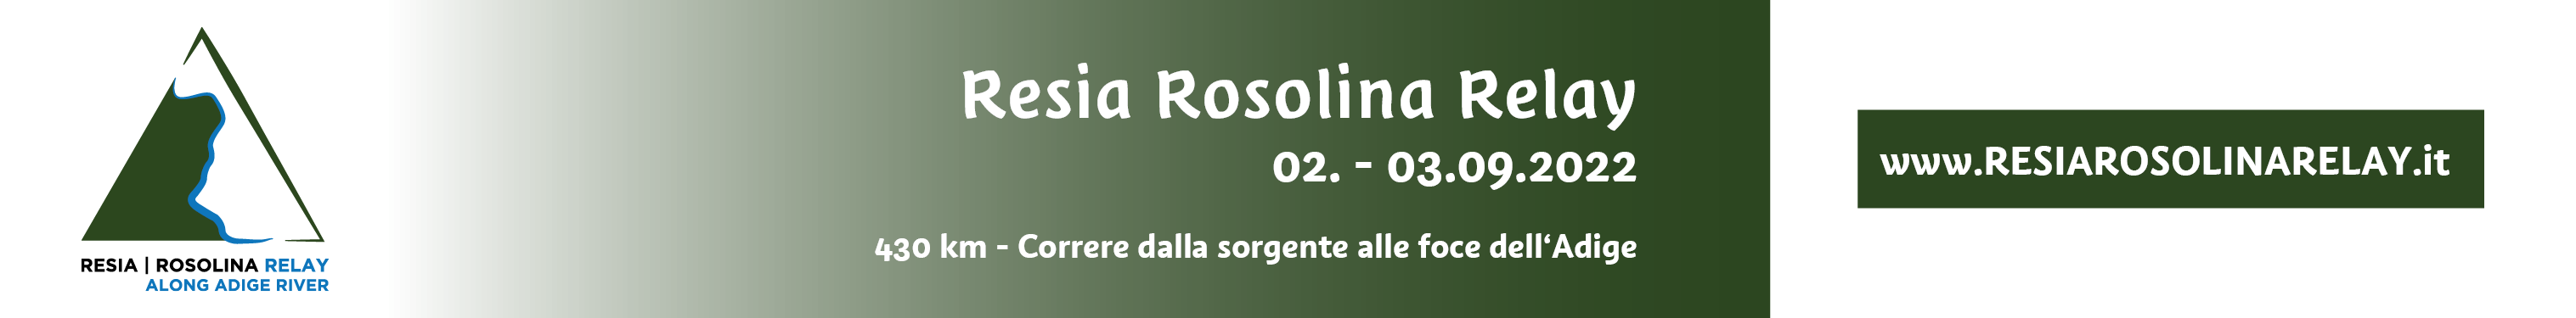 Resia Rosolina Relay 2022 testata